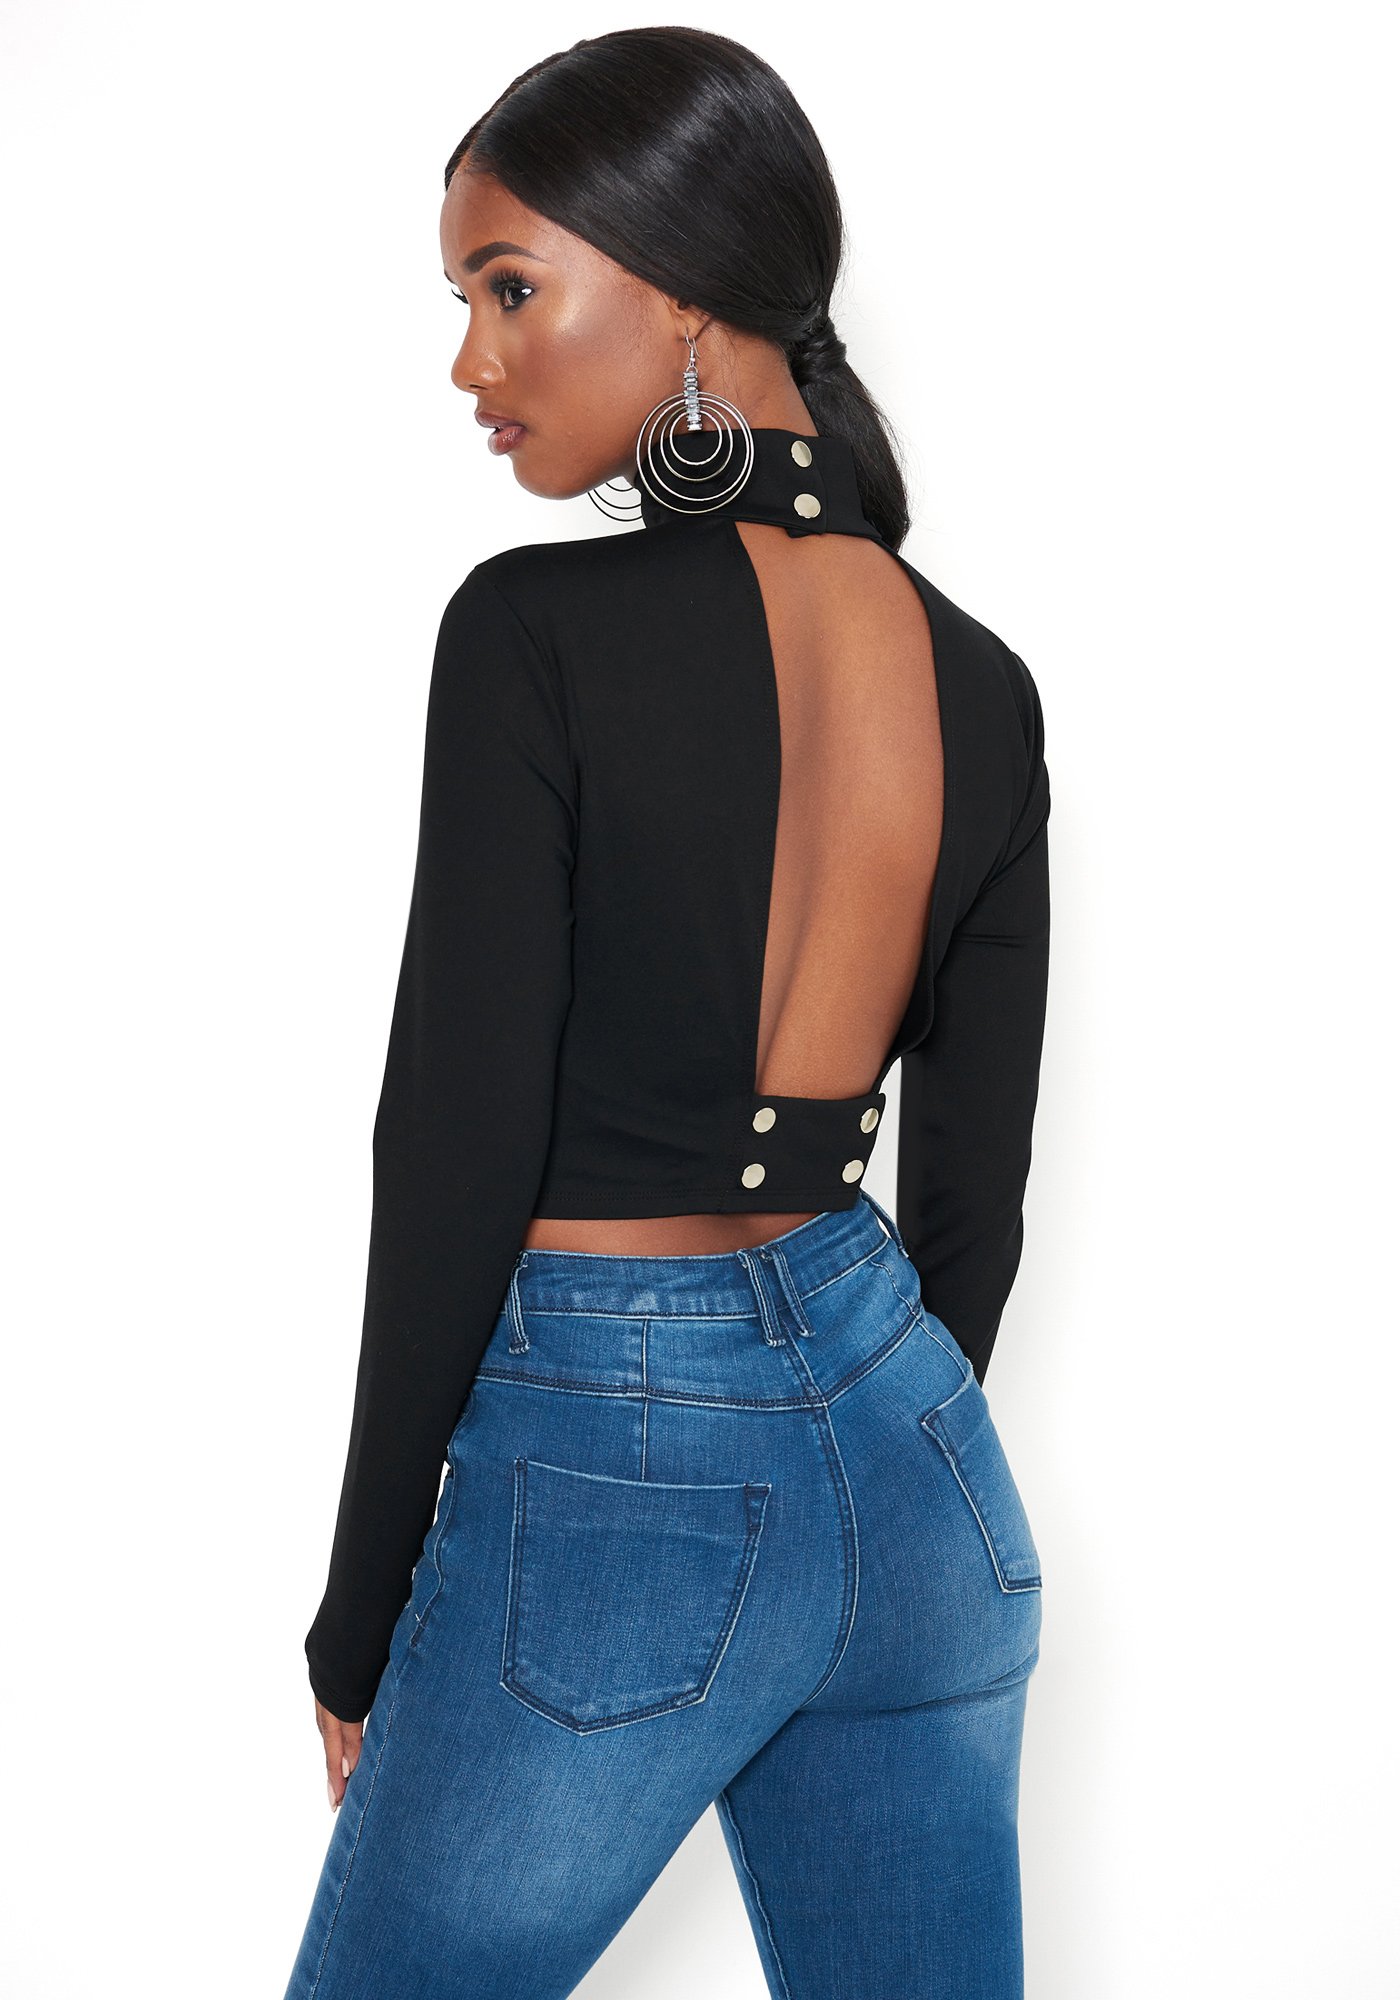 Bebe Women's Open Back Top, Size Large in Black Nylon/Spandex